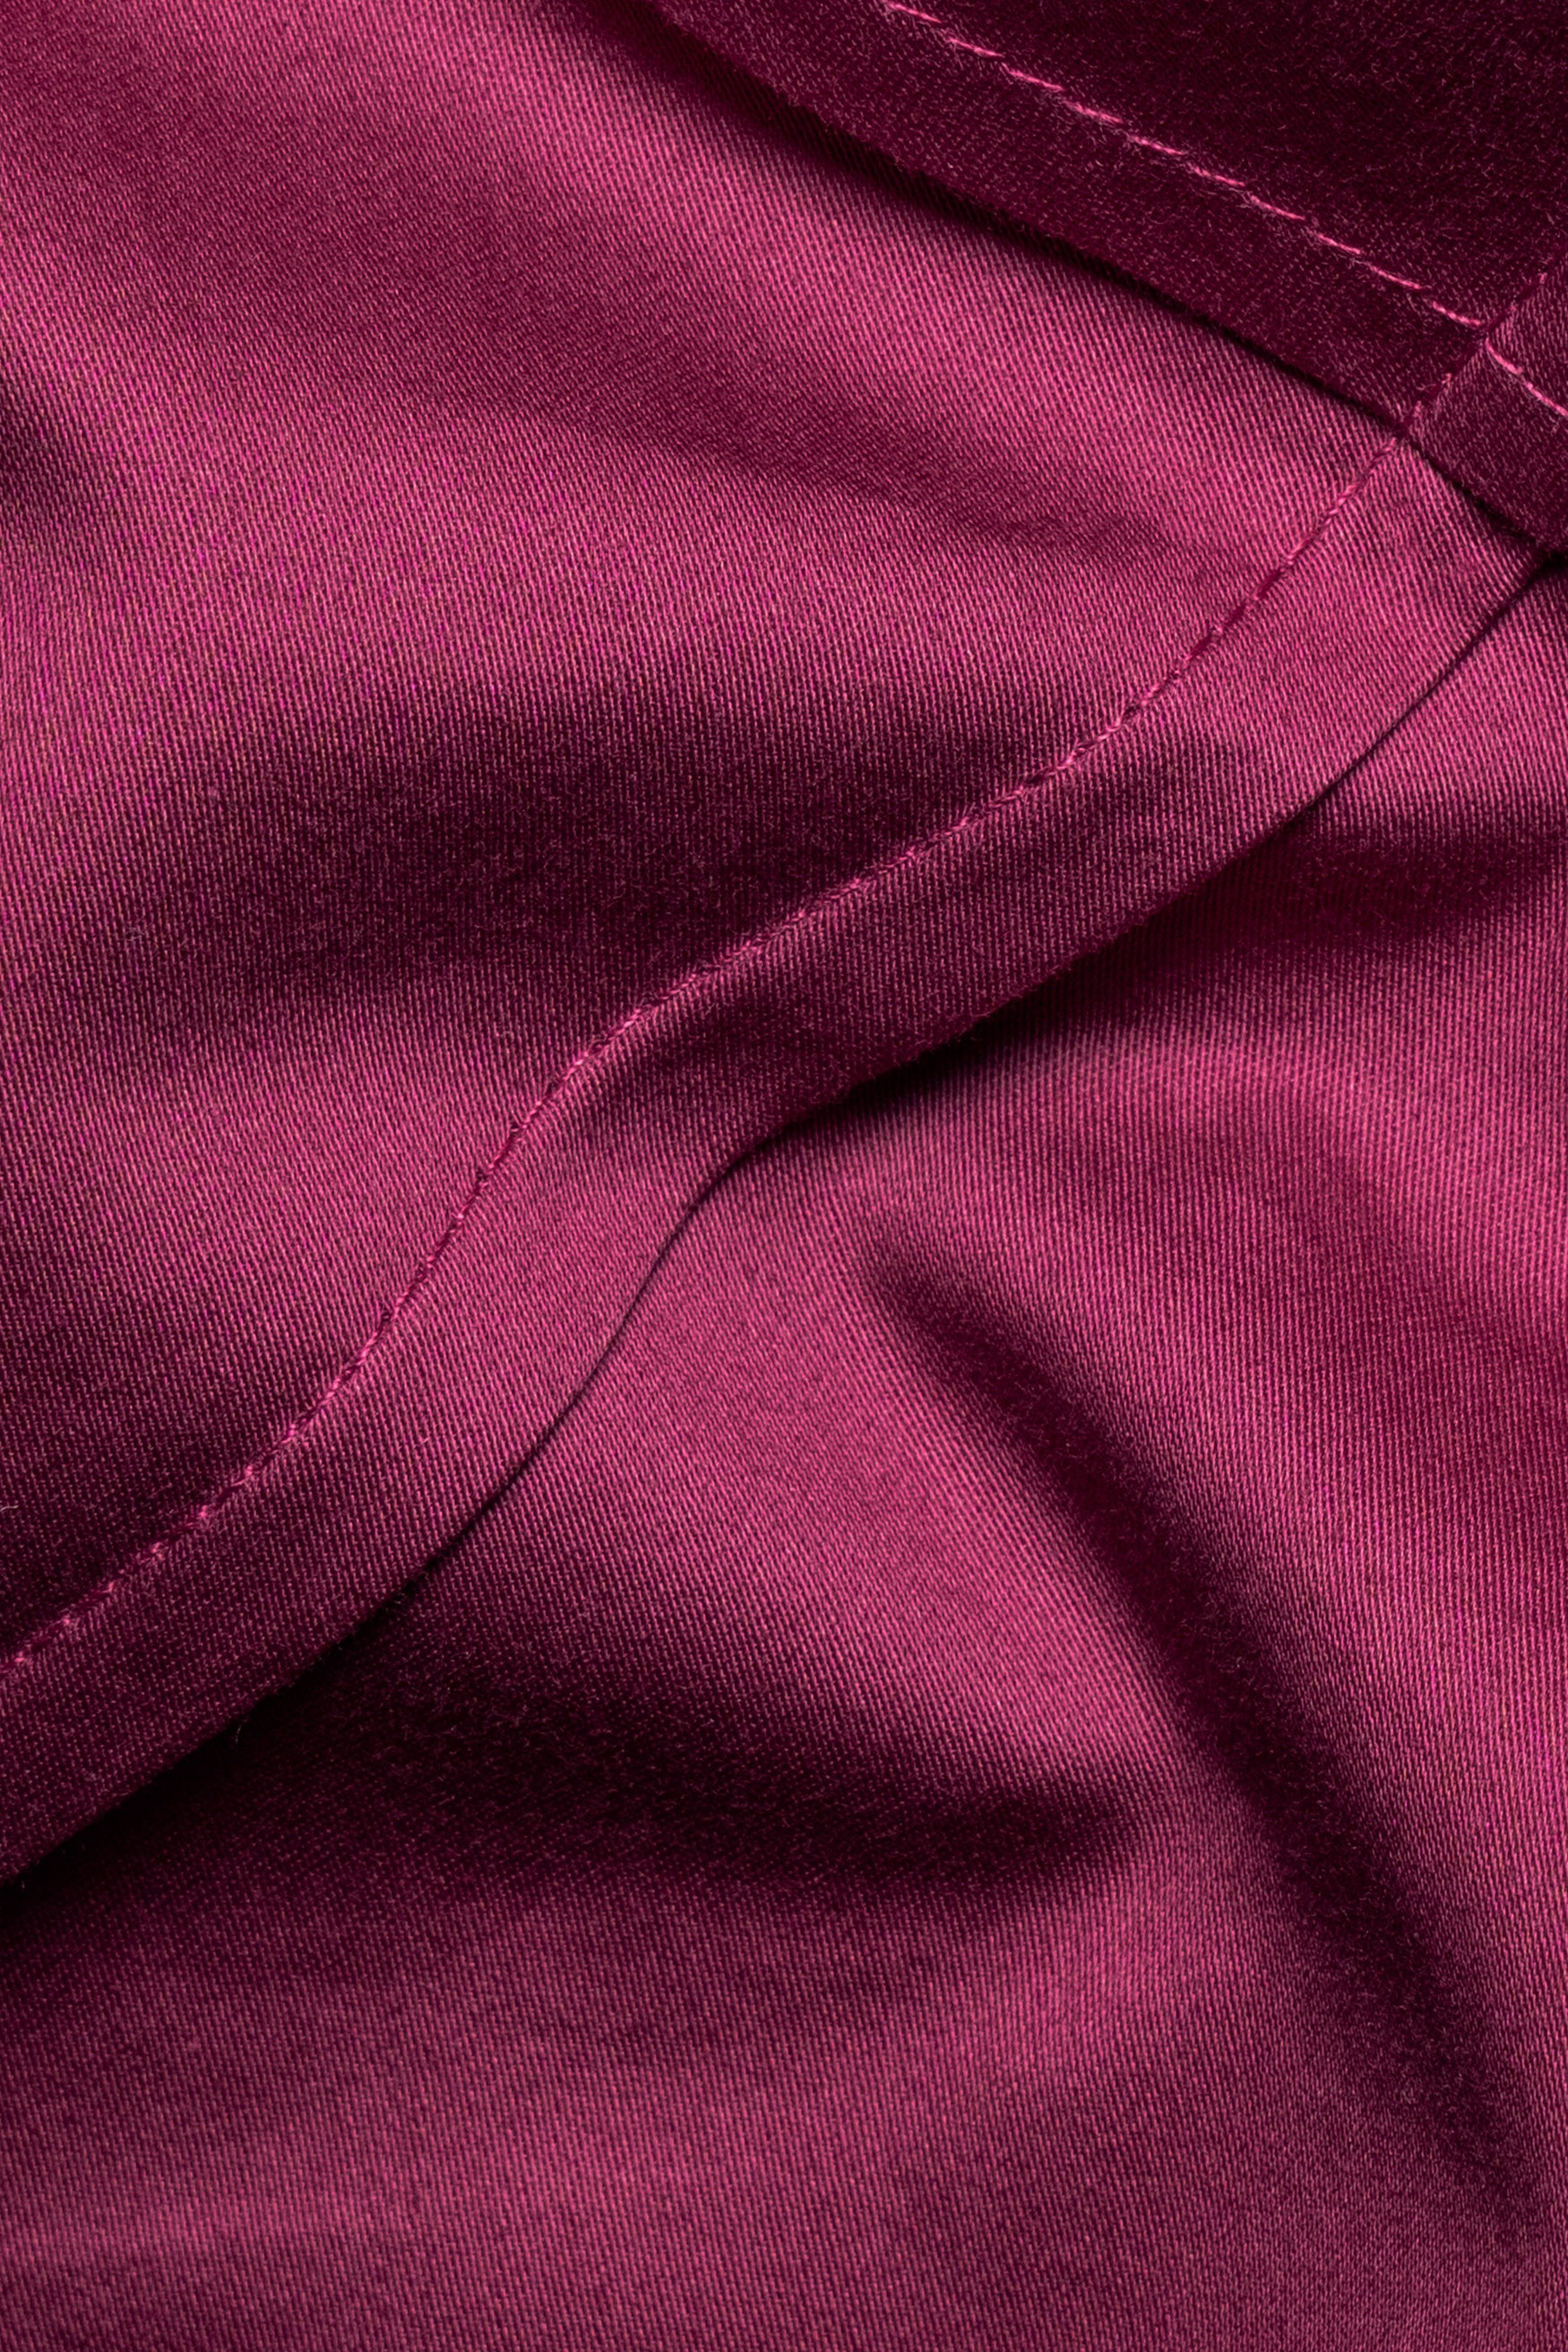 Camelot Pink Cross Tucks Subtle Sheen Super Soft Premium Cotton Designer Shirt